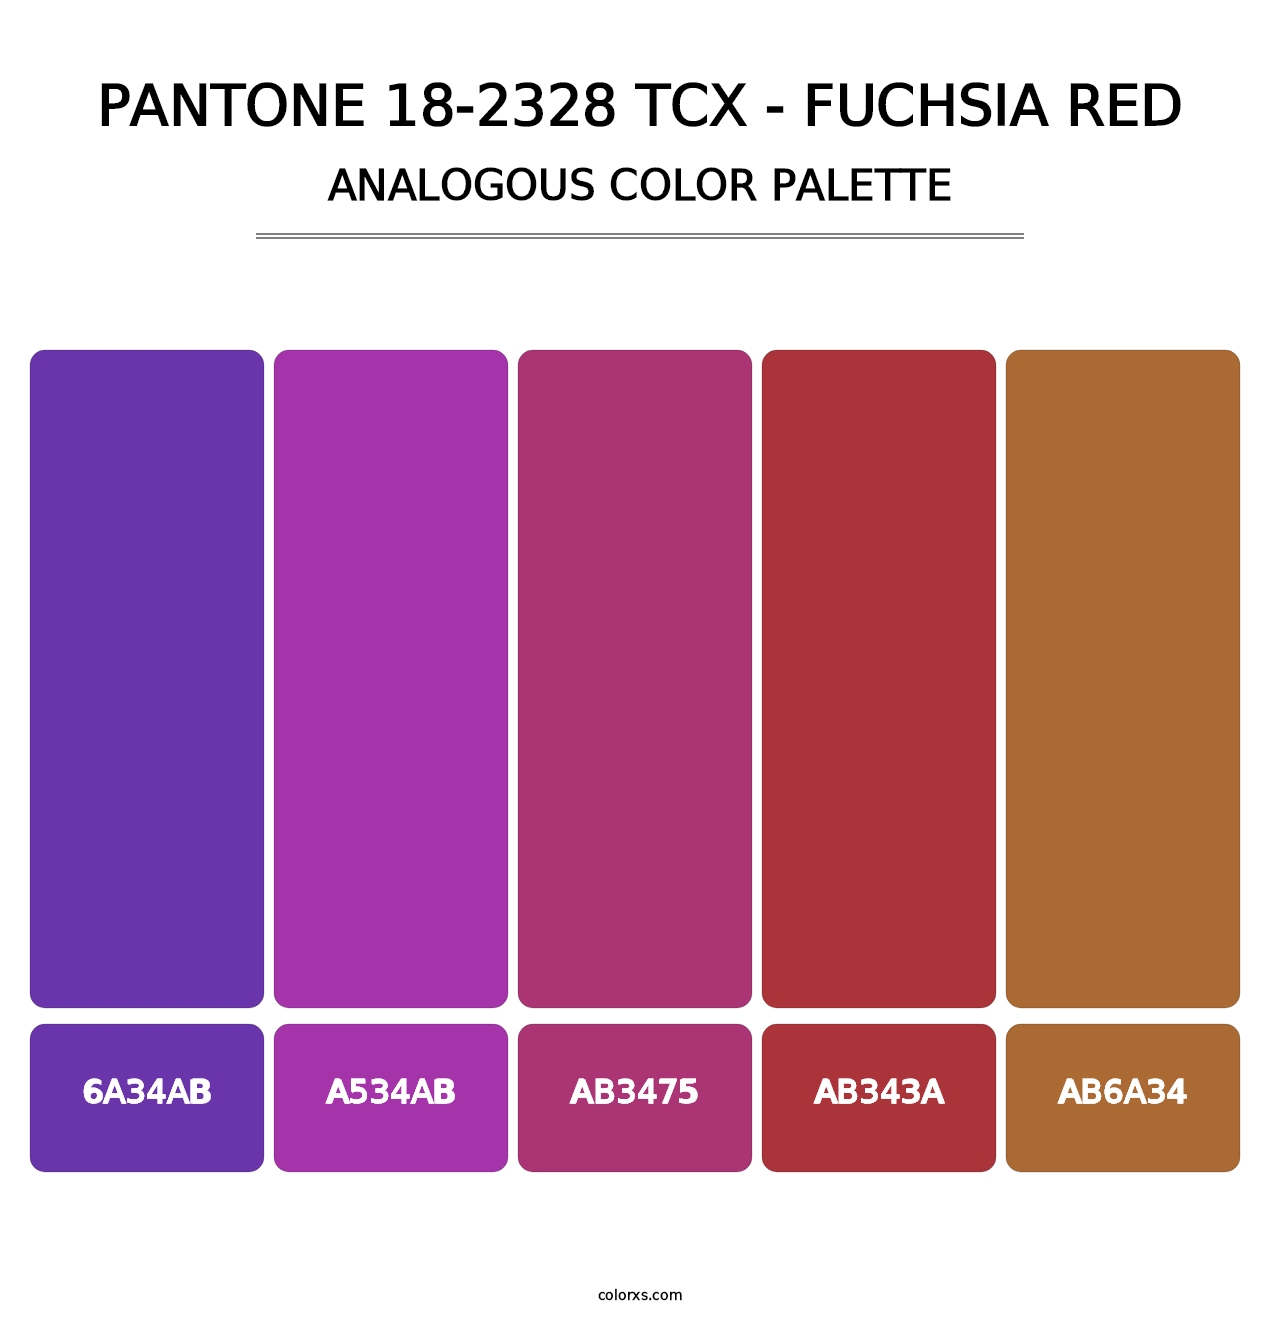 PANTONE 18-2328 TCX - Fuchsia Red - Analogous Color Palette